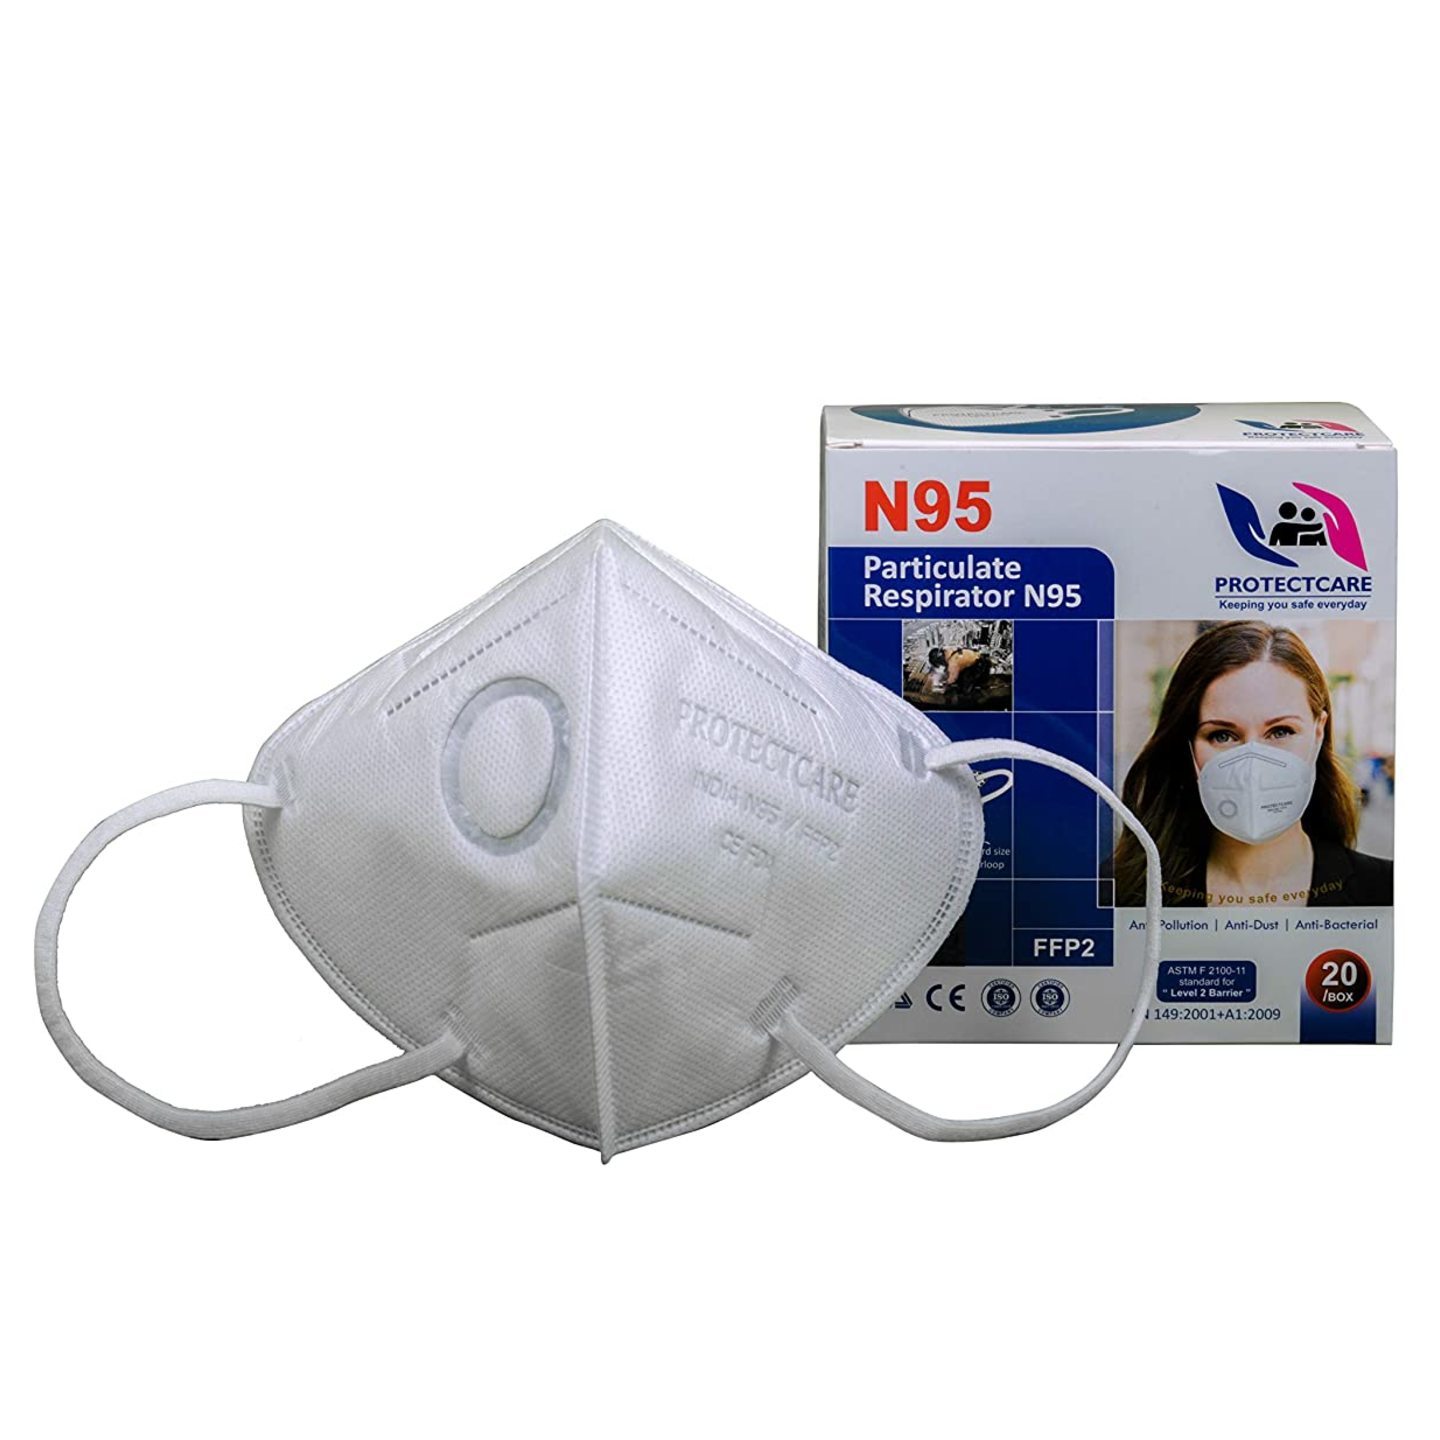 PROTECTCARE N95 Mask No box